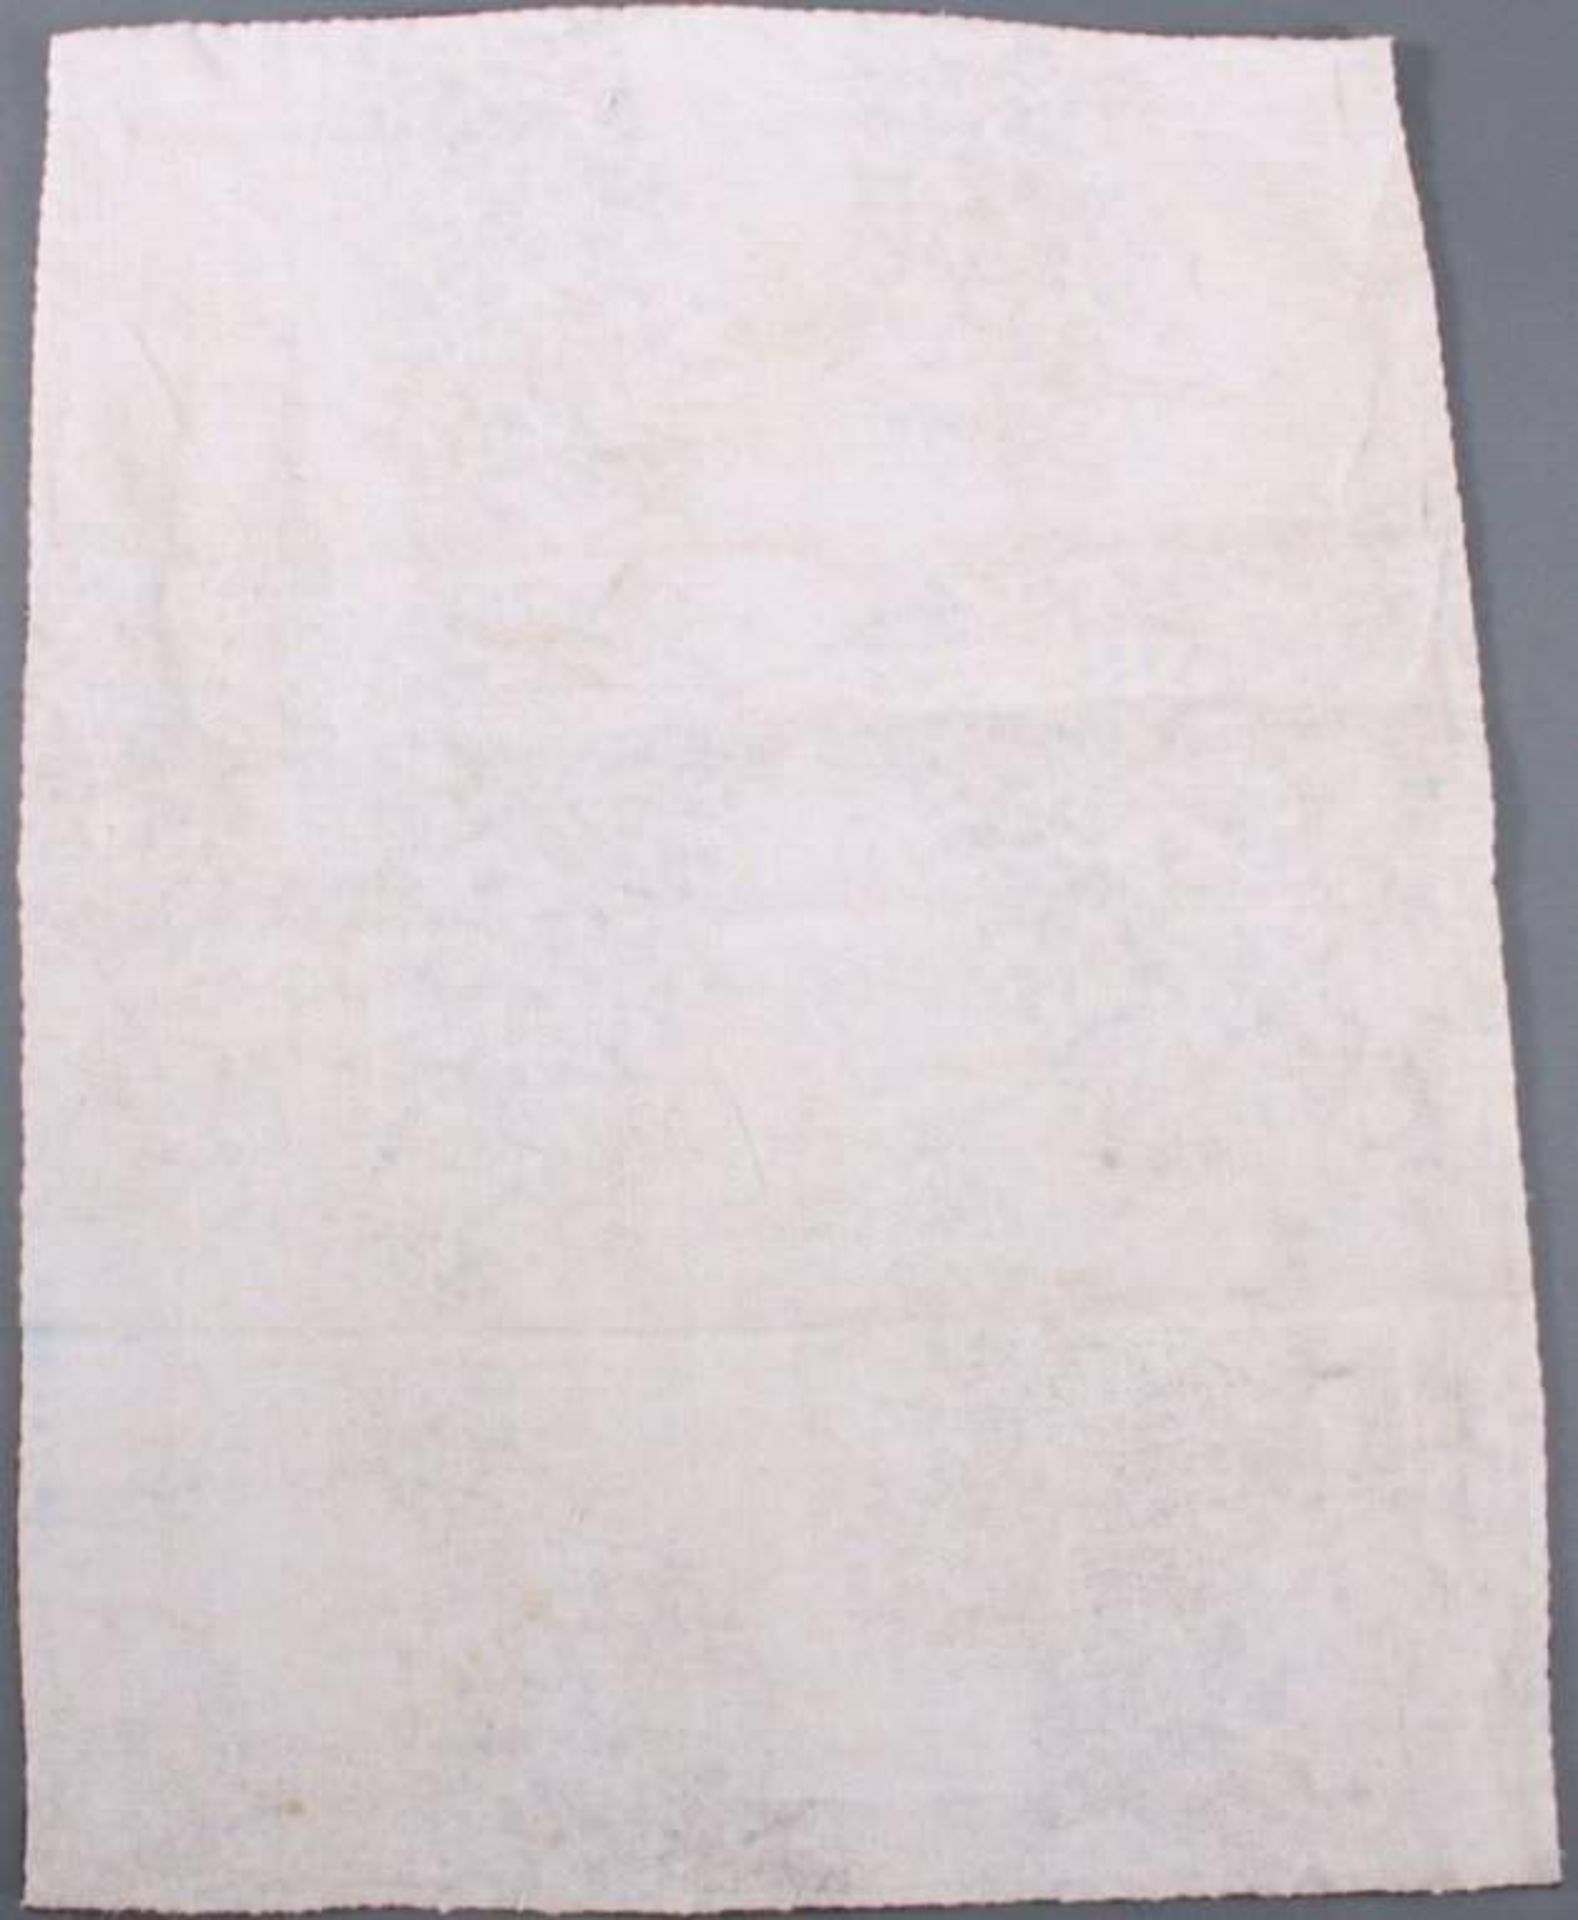 Gobelin 18. Jh.rechteckige Form, Blumendekor, ca. 68x50 cm - Bild 2 aus 2